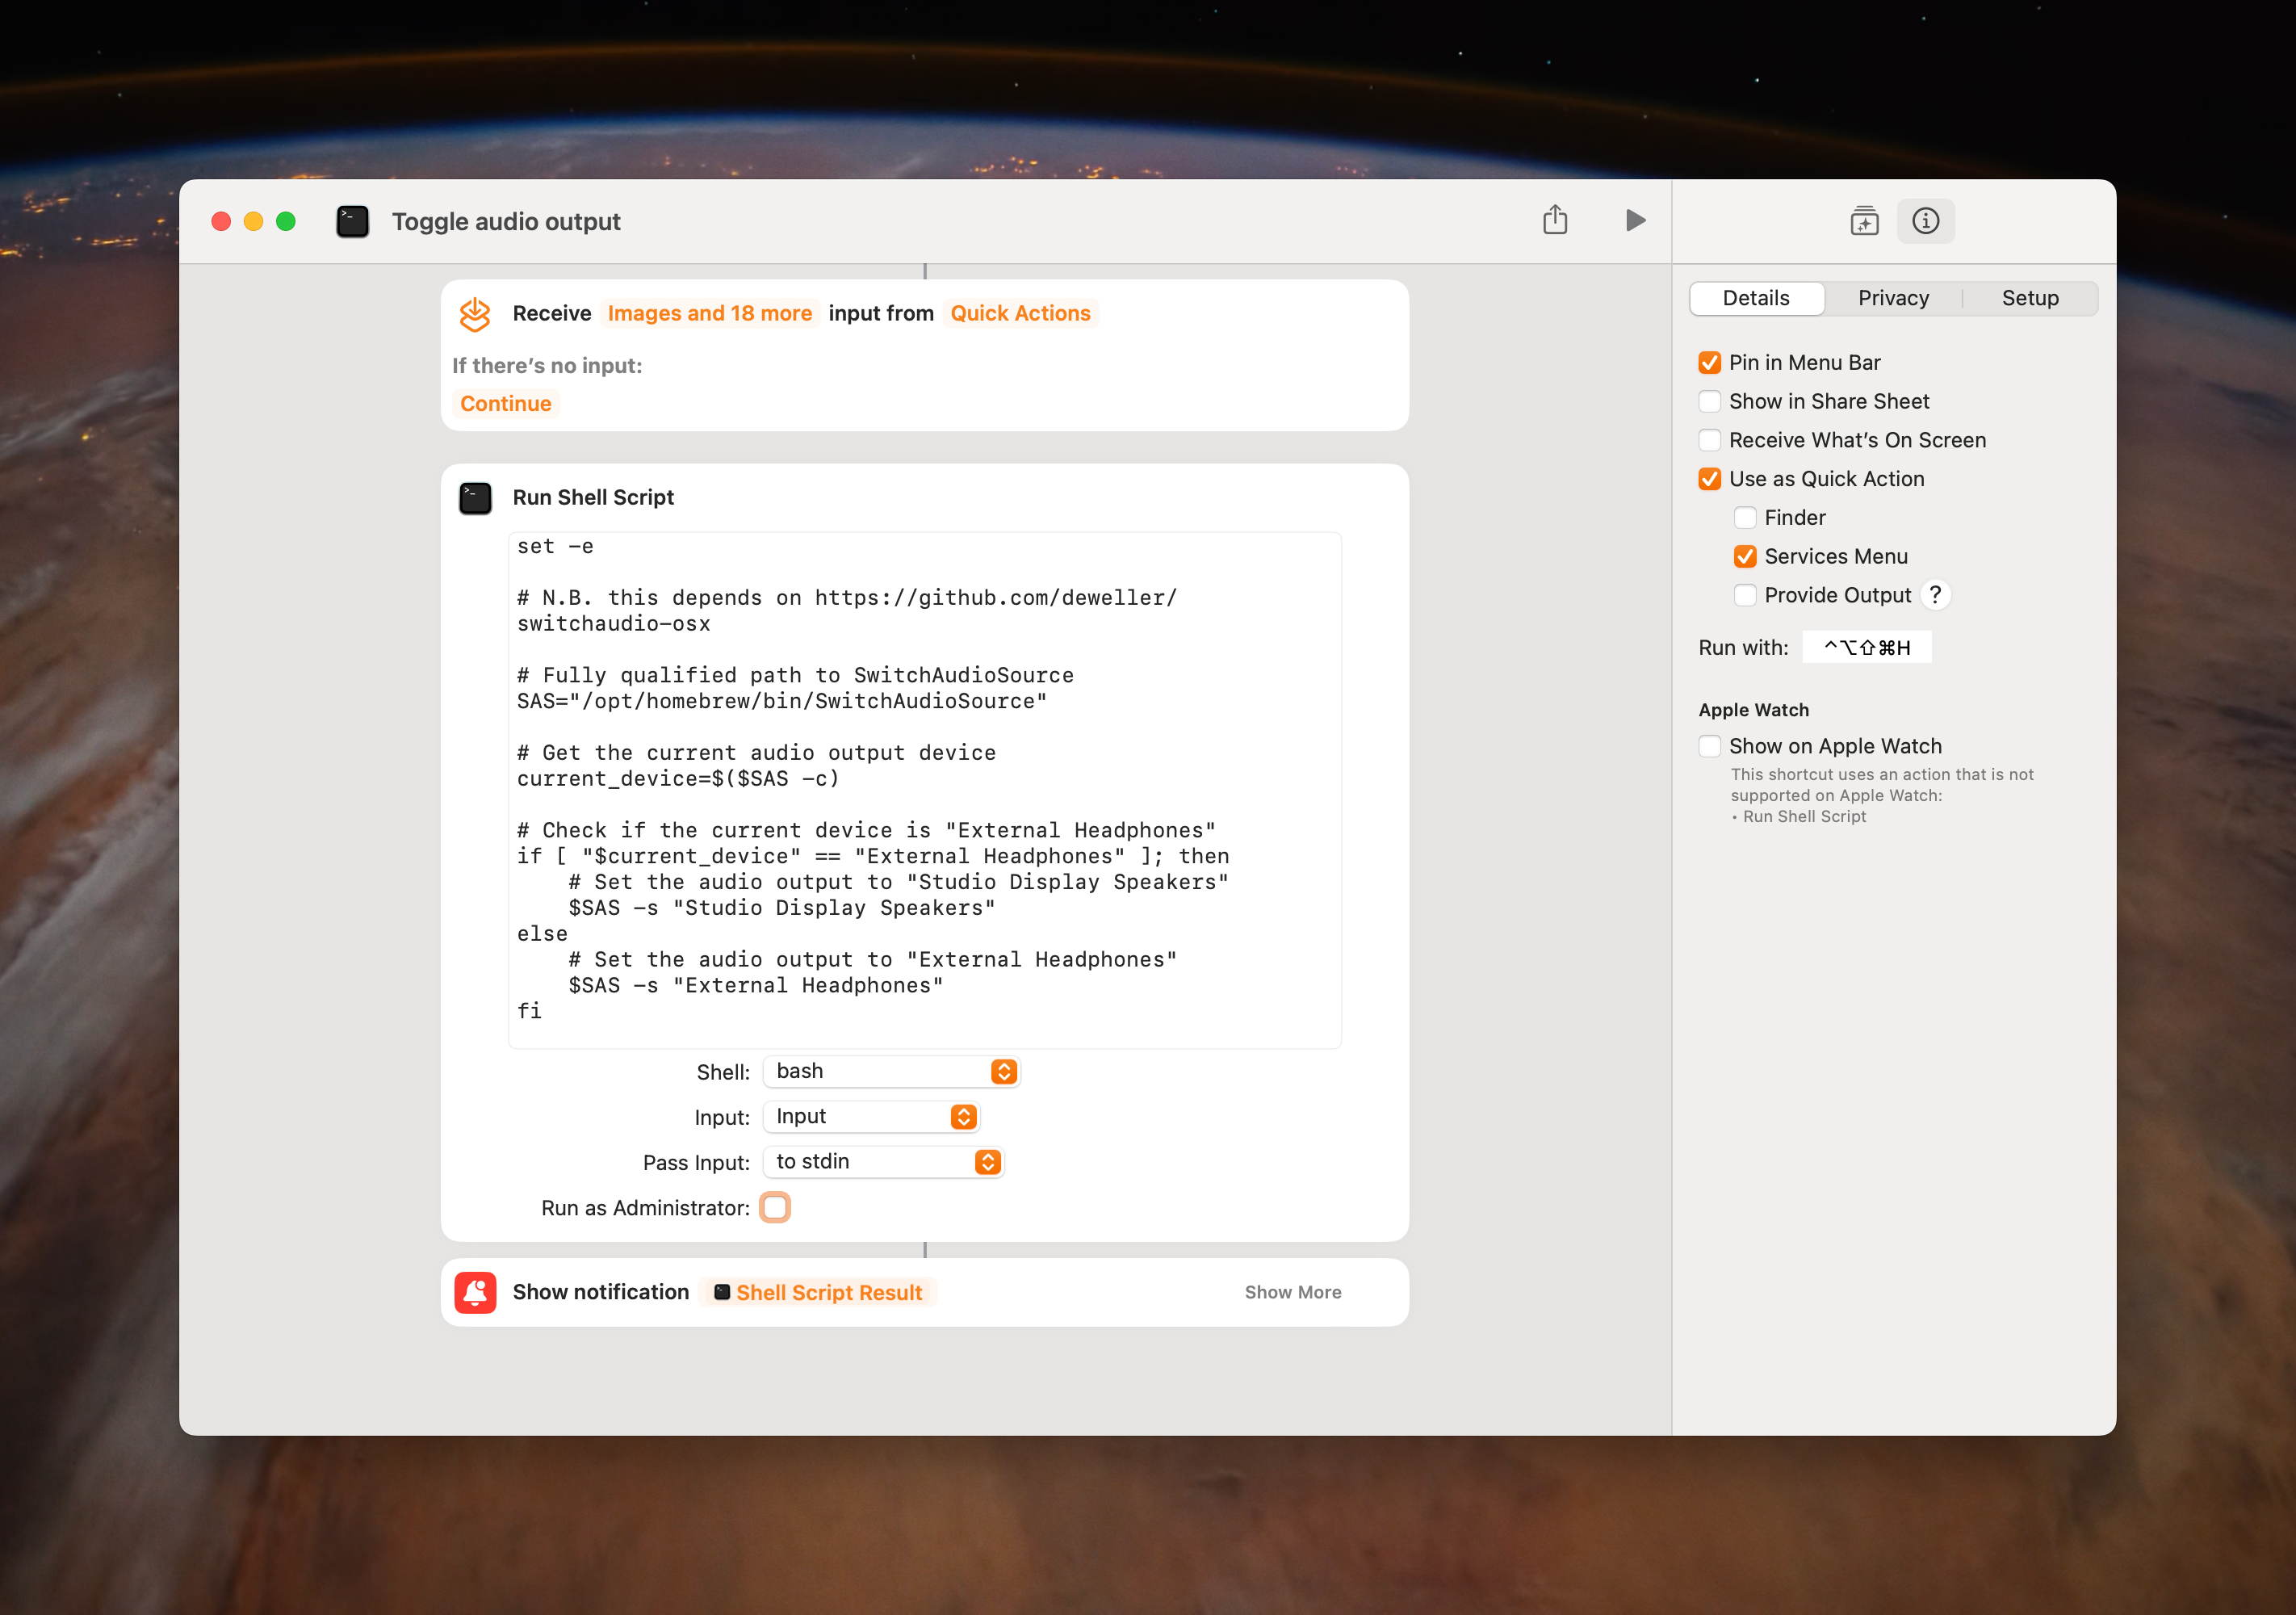 Screenshot showing the Shortcuts app using the Run Shell Script action to run that shell script